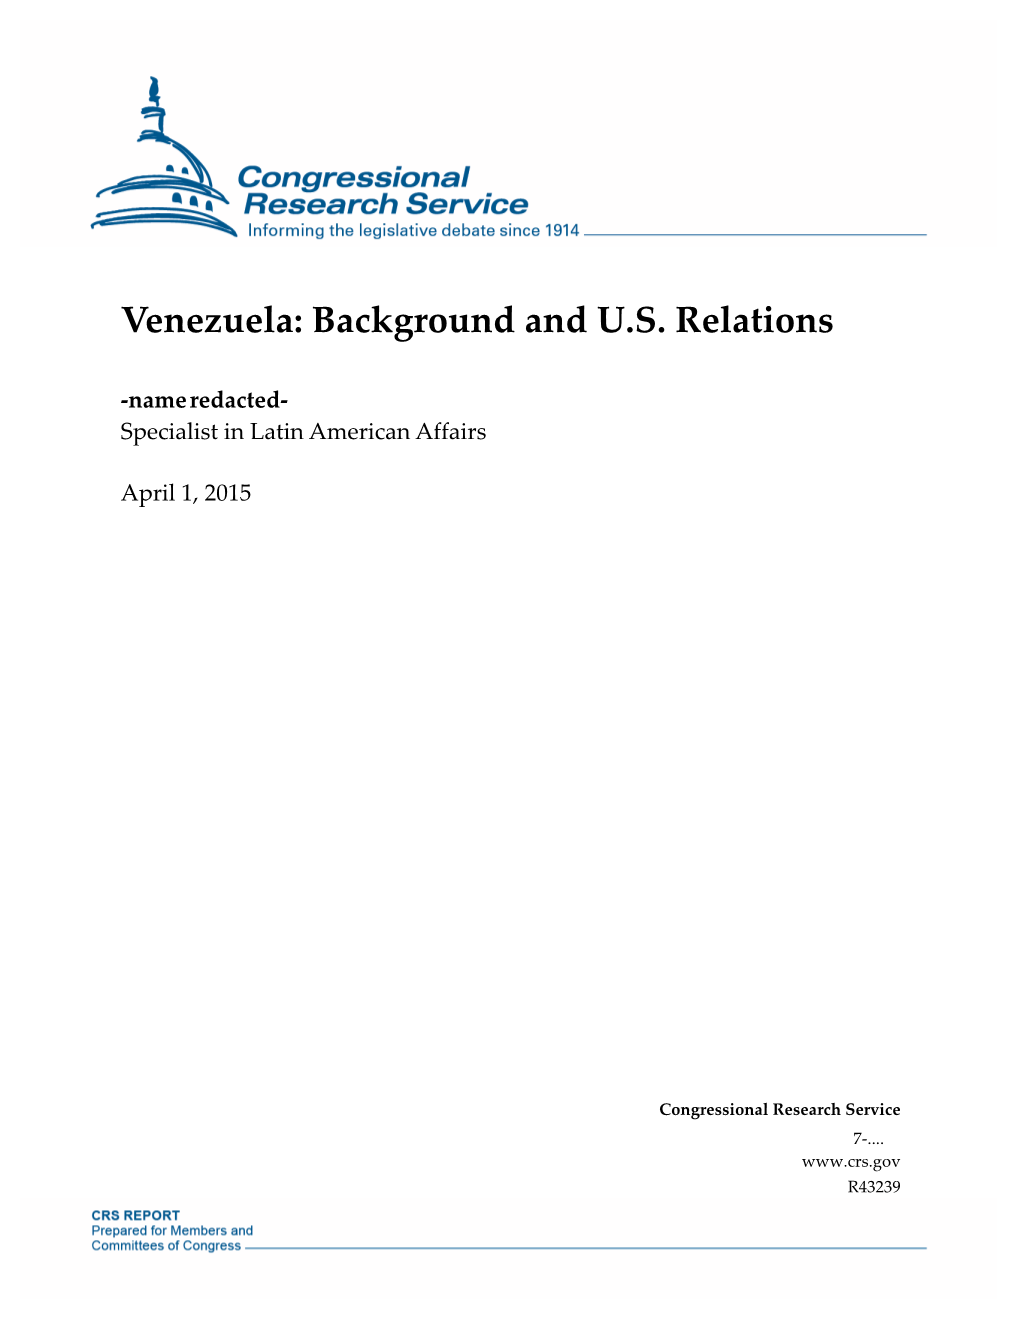 Venezuela: Background and US Relations